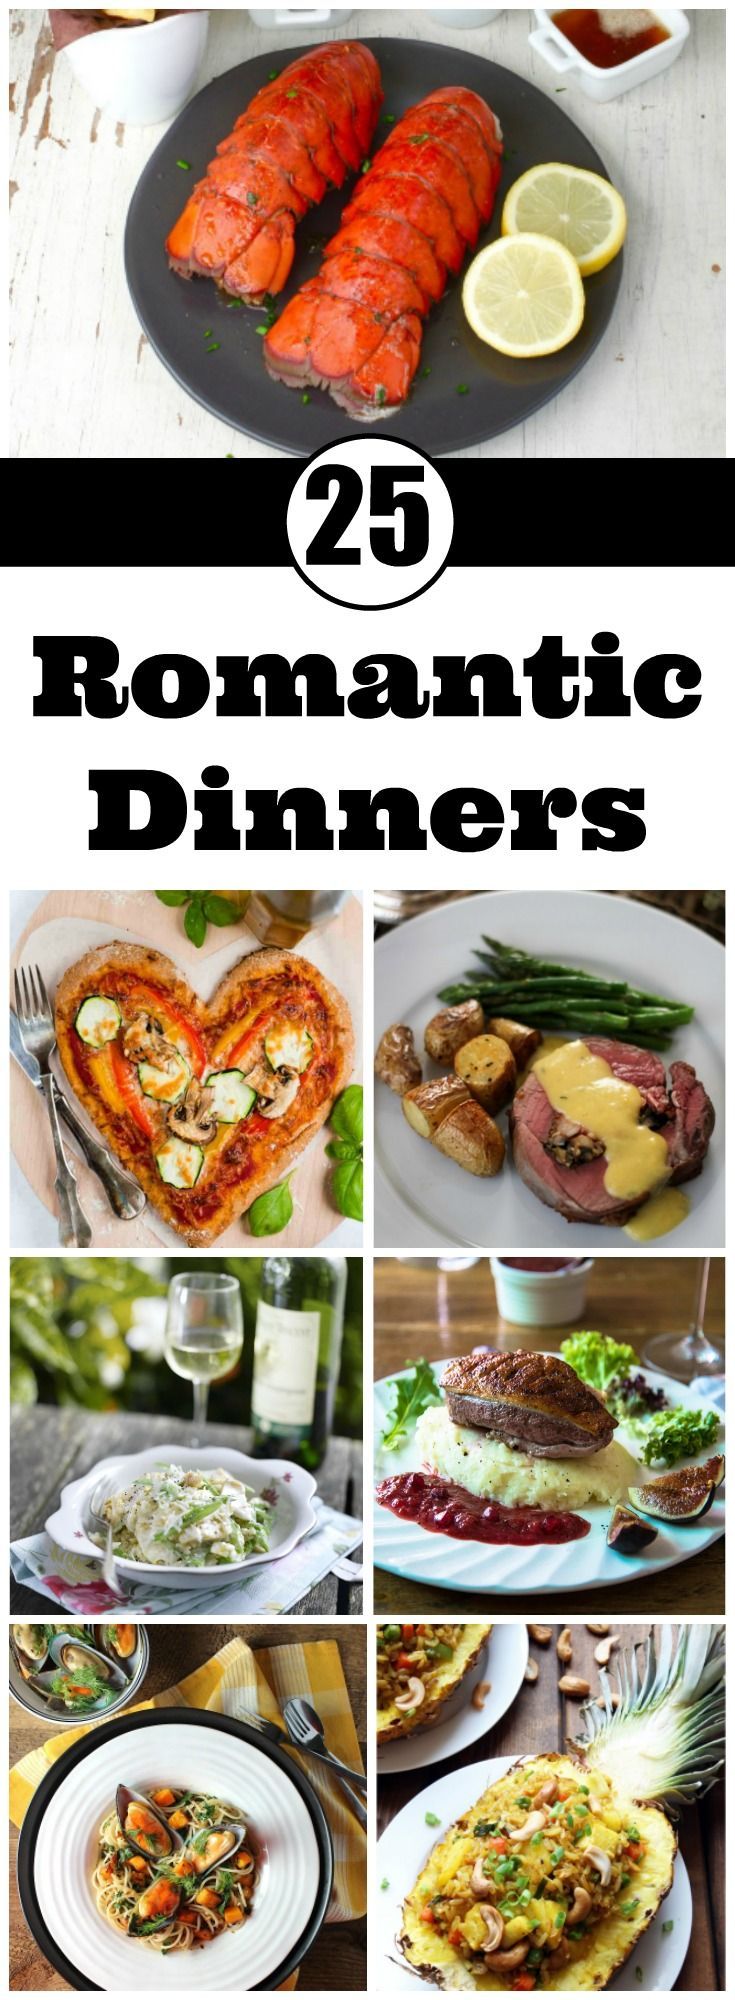 21 romantic dinner recipes
 ideas